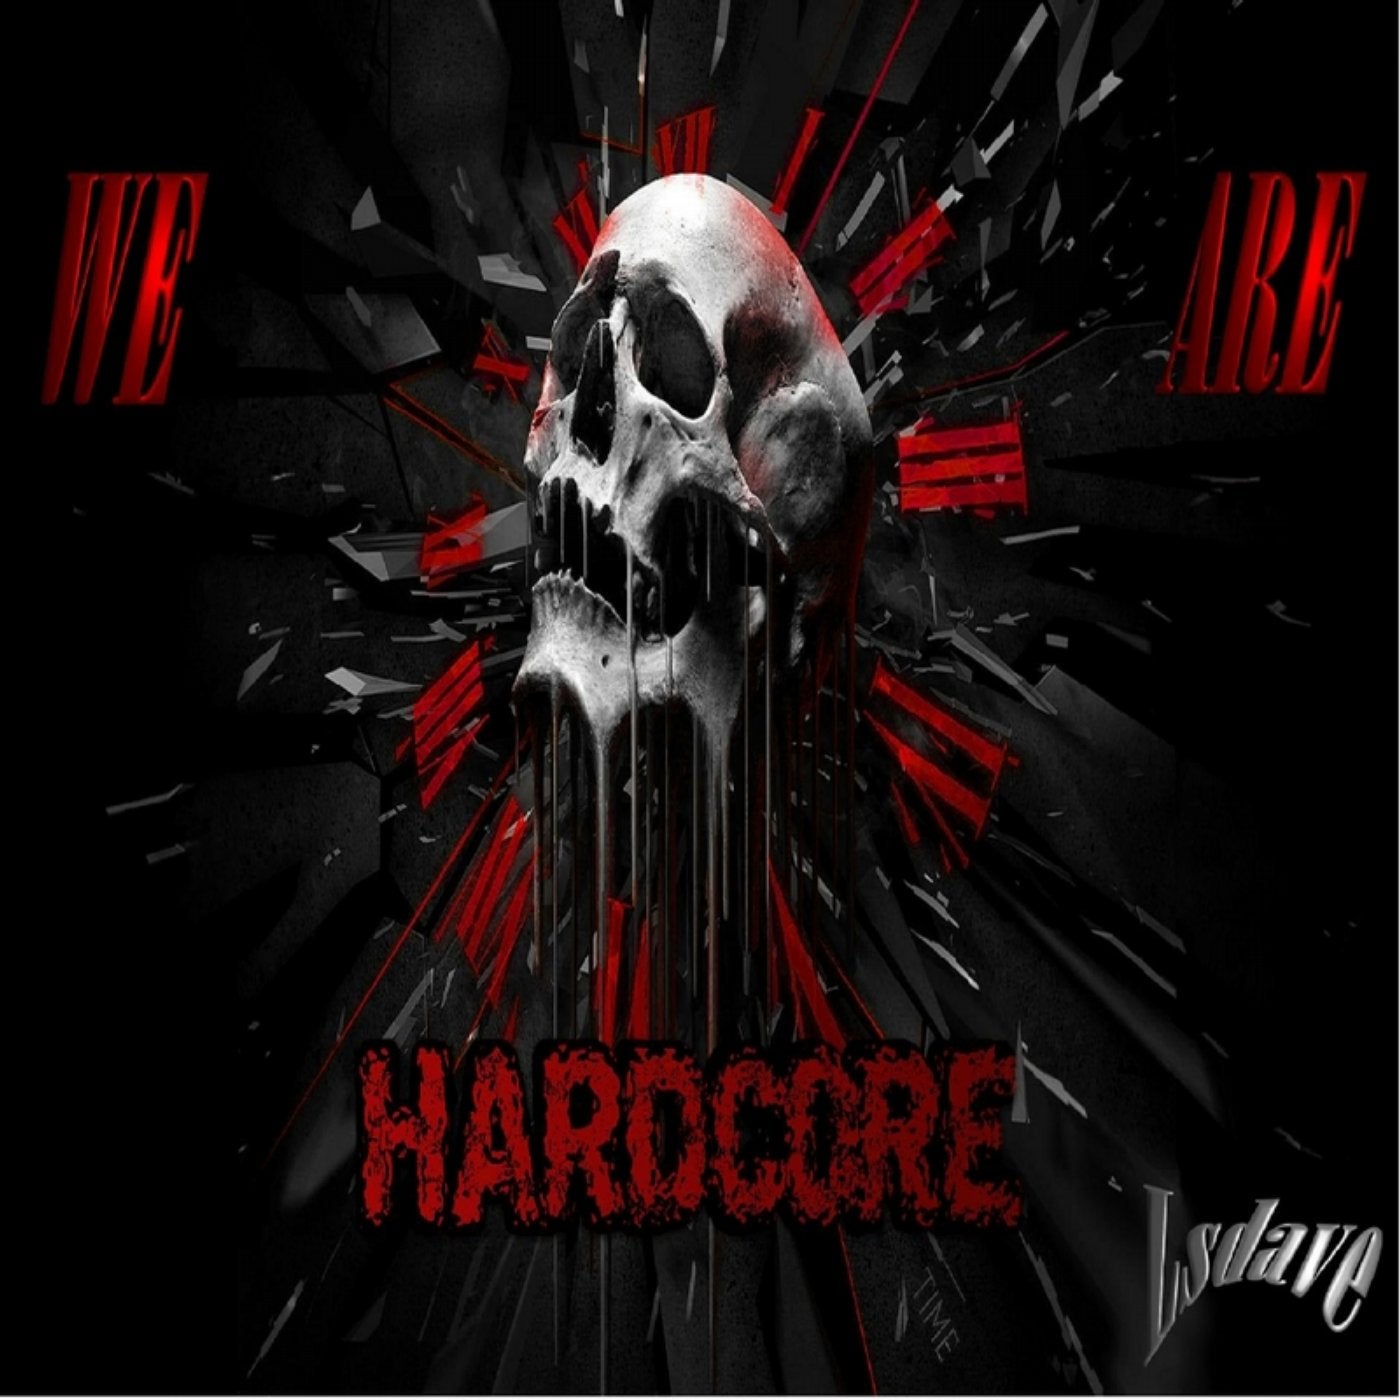 We Are Hardcore